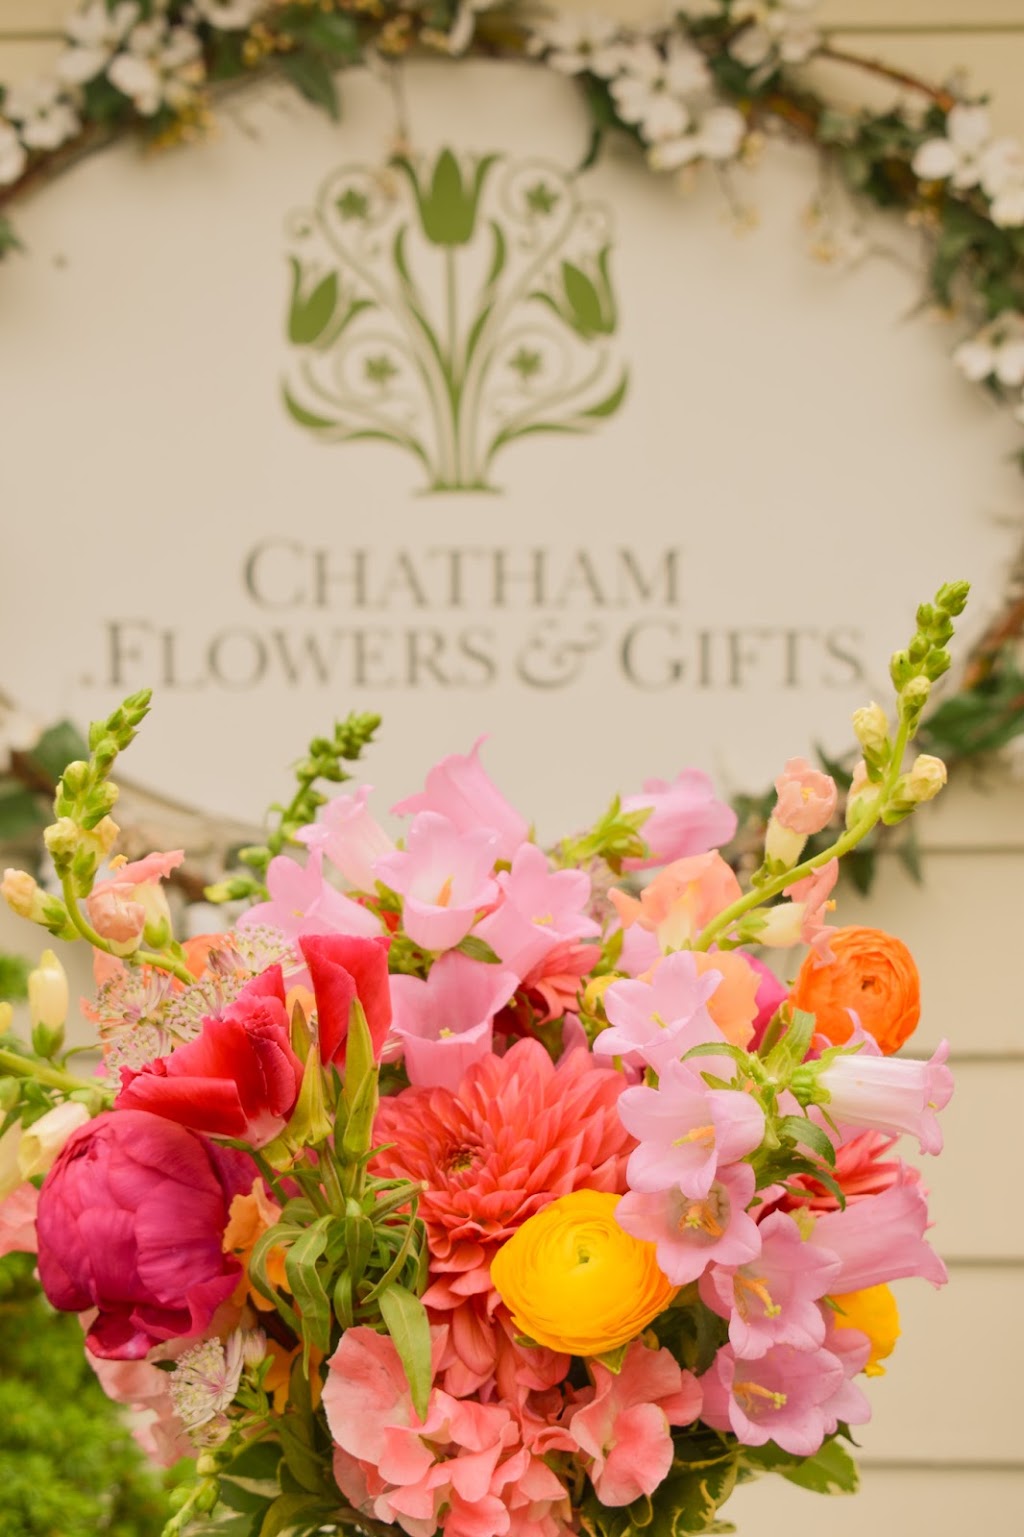 Chatham Flowers and Gifts | 2117 NY-203, Chatham, NY 12037 | Phone: (518) 392-6414